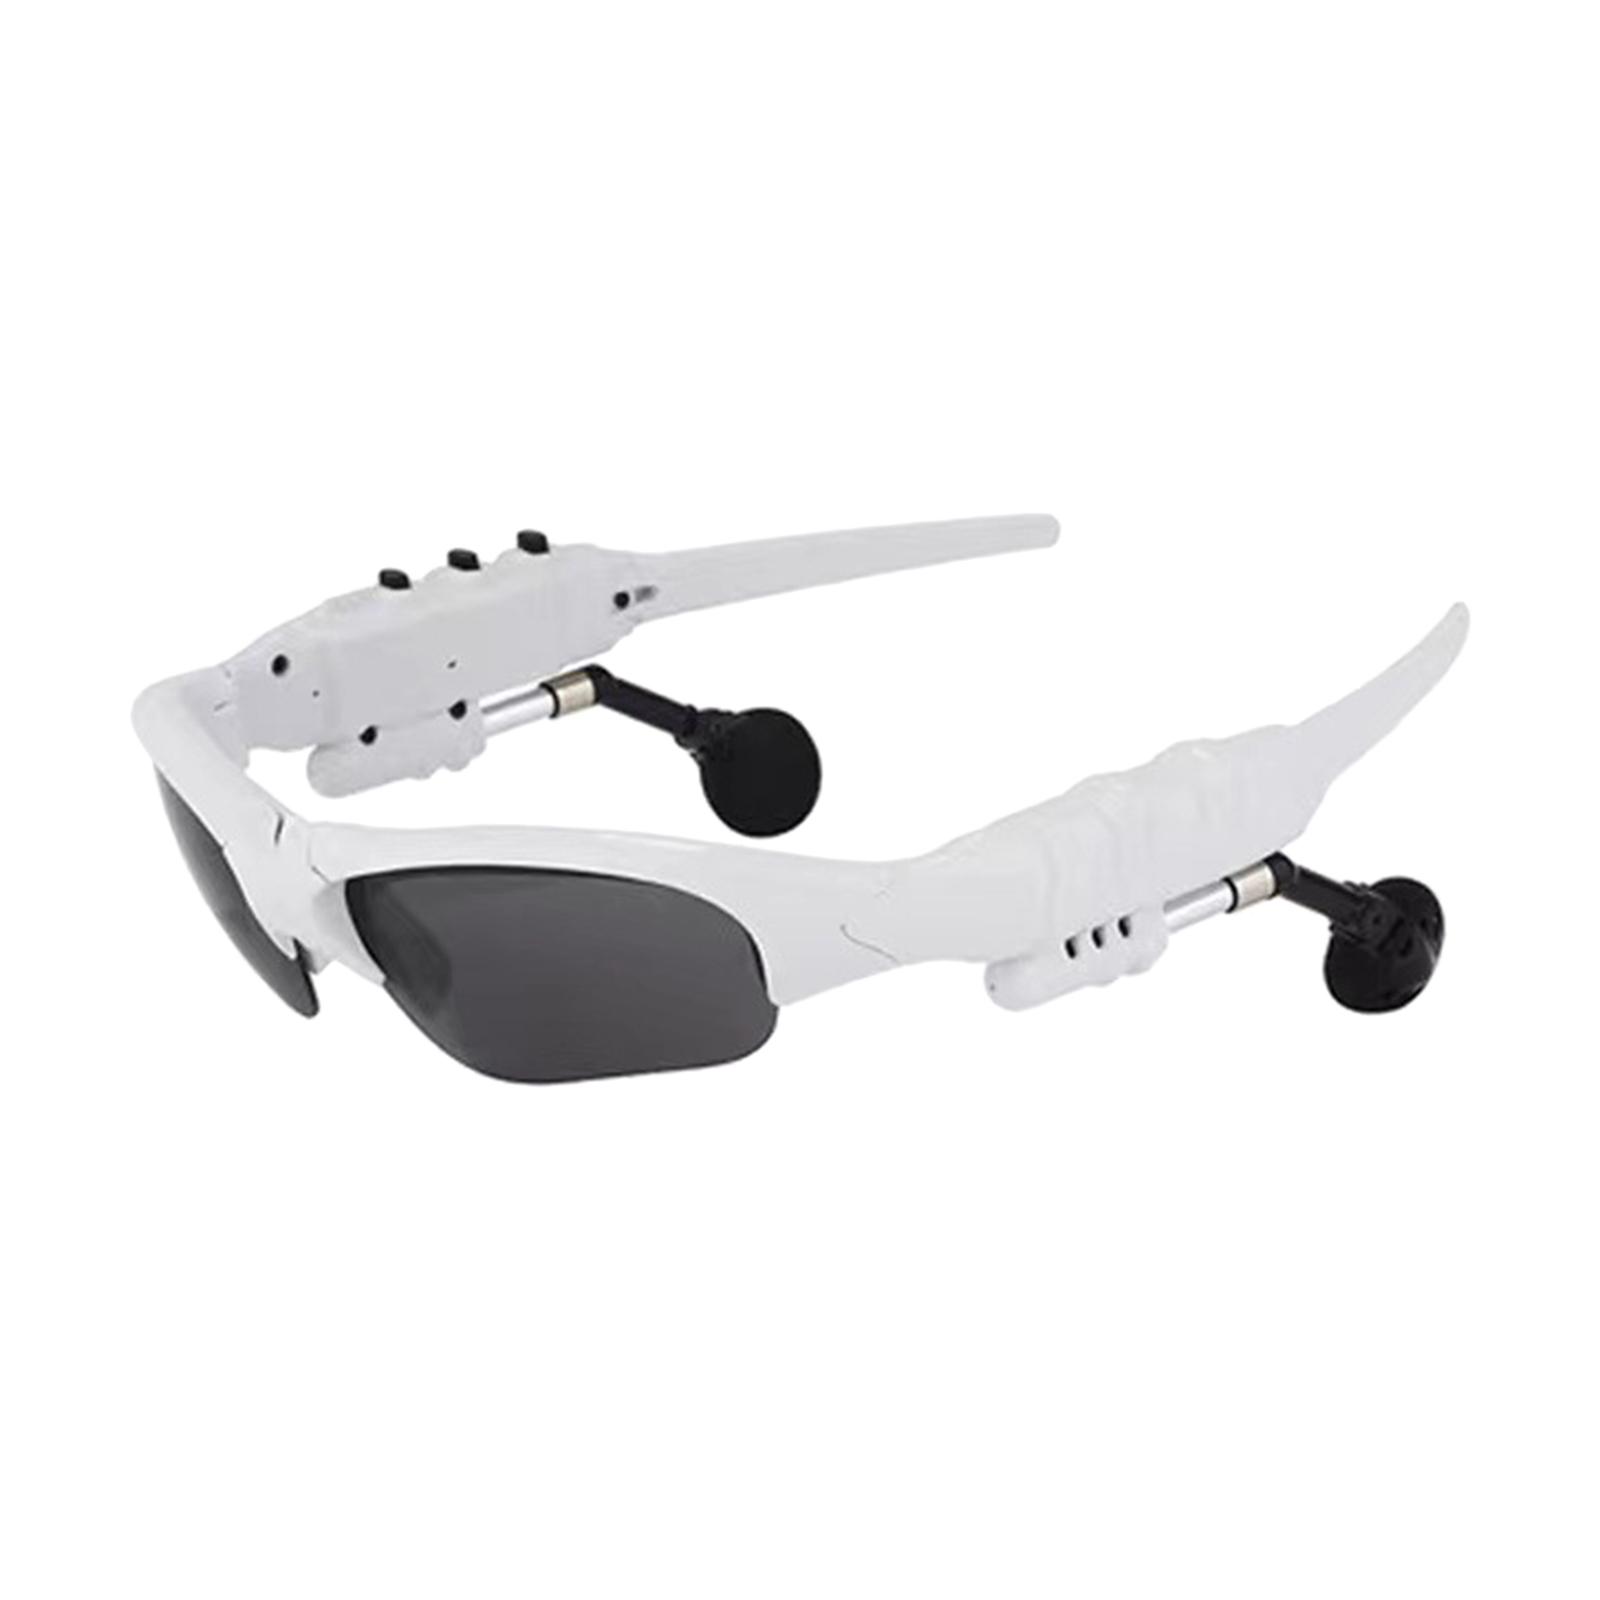 Fashion Headphones Sunglasses Built in Mic Stereo Headset Audio Sunglasses White